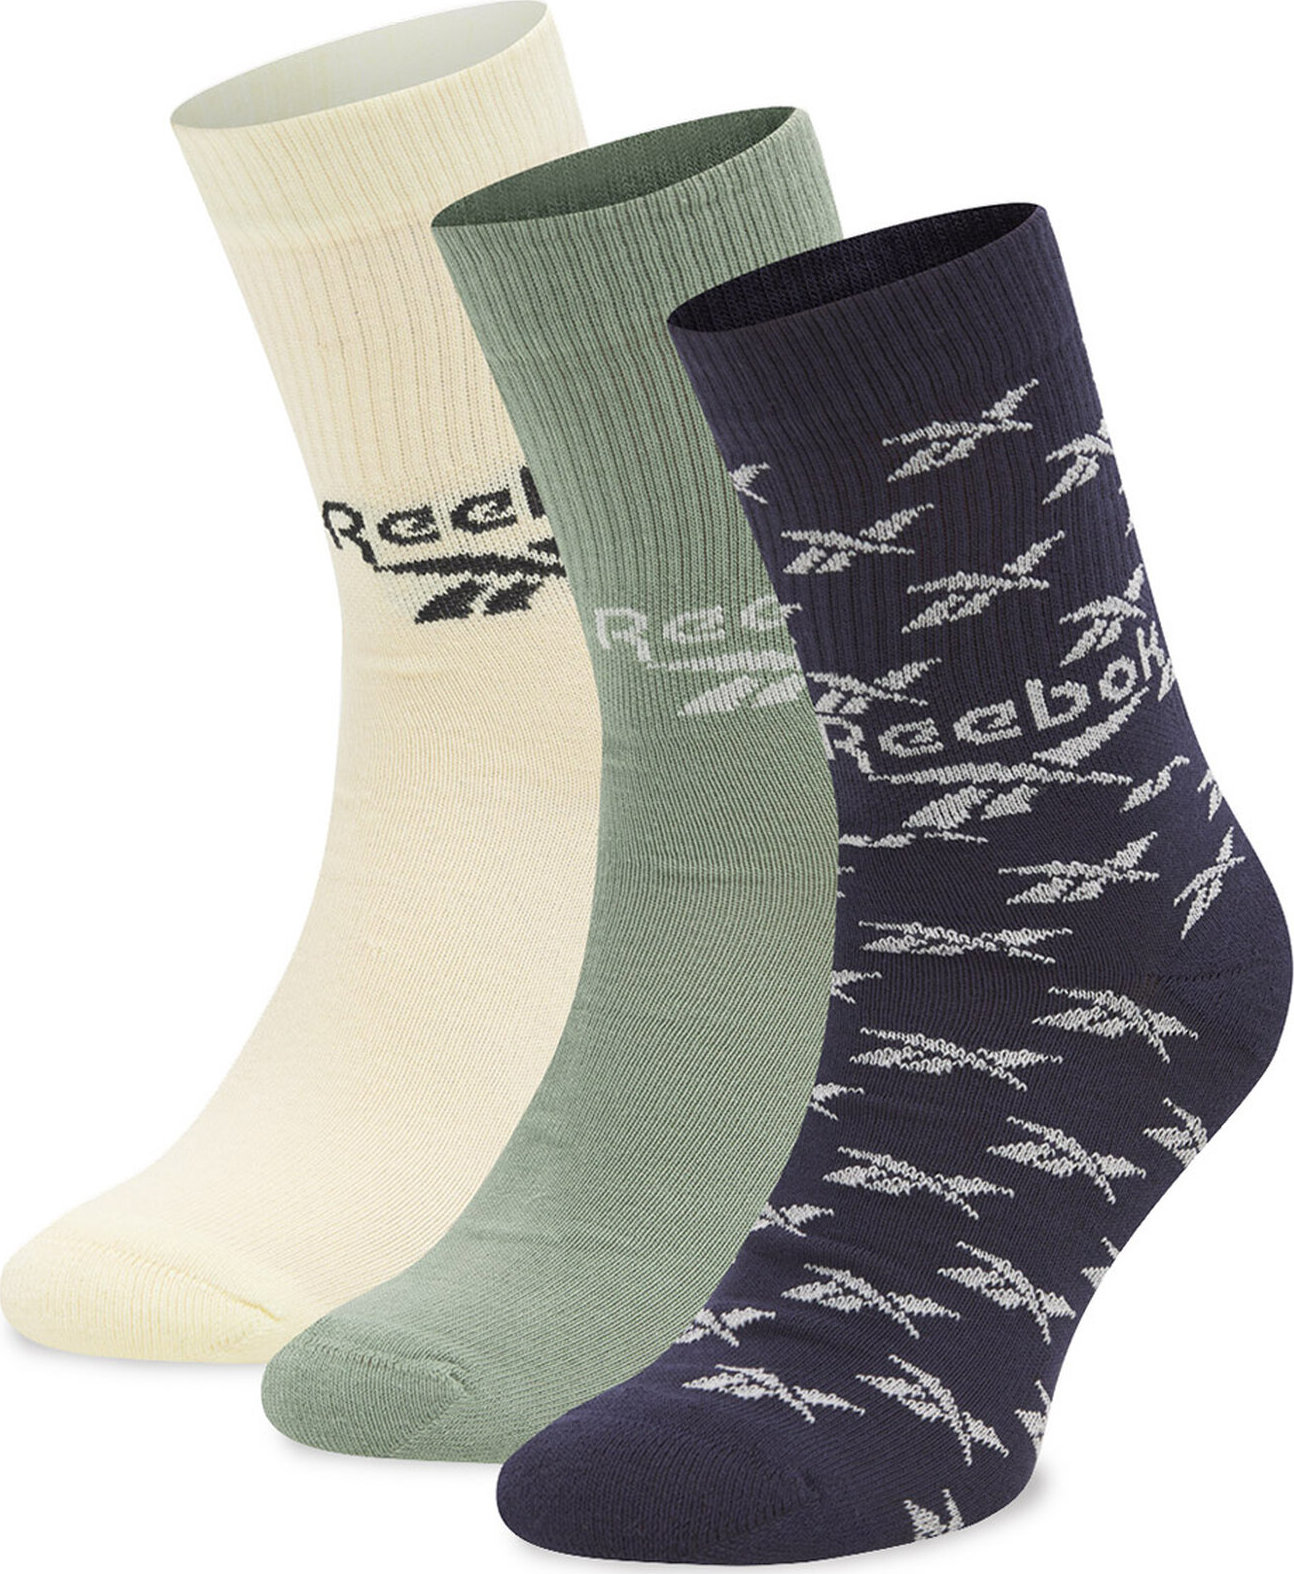 Sada 3 párů vysokých ponožek unisex Reebok Cl Fo Crew Sock 3P GN7668 Mix